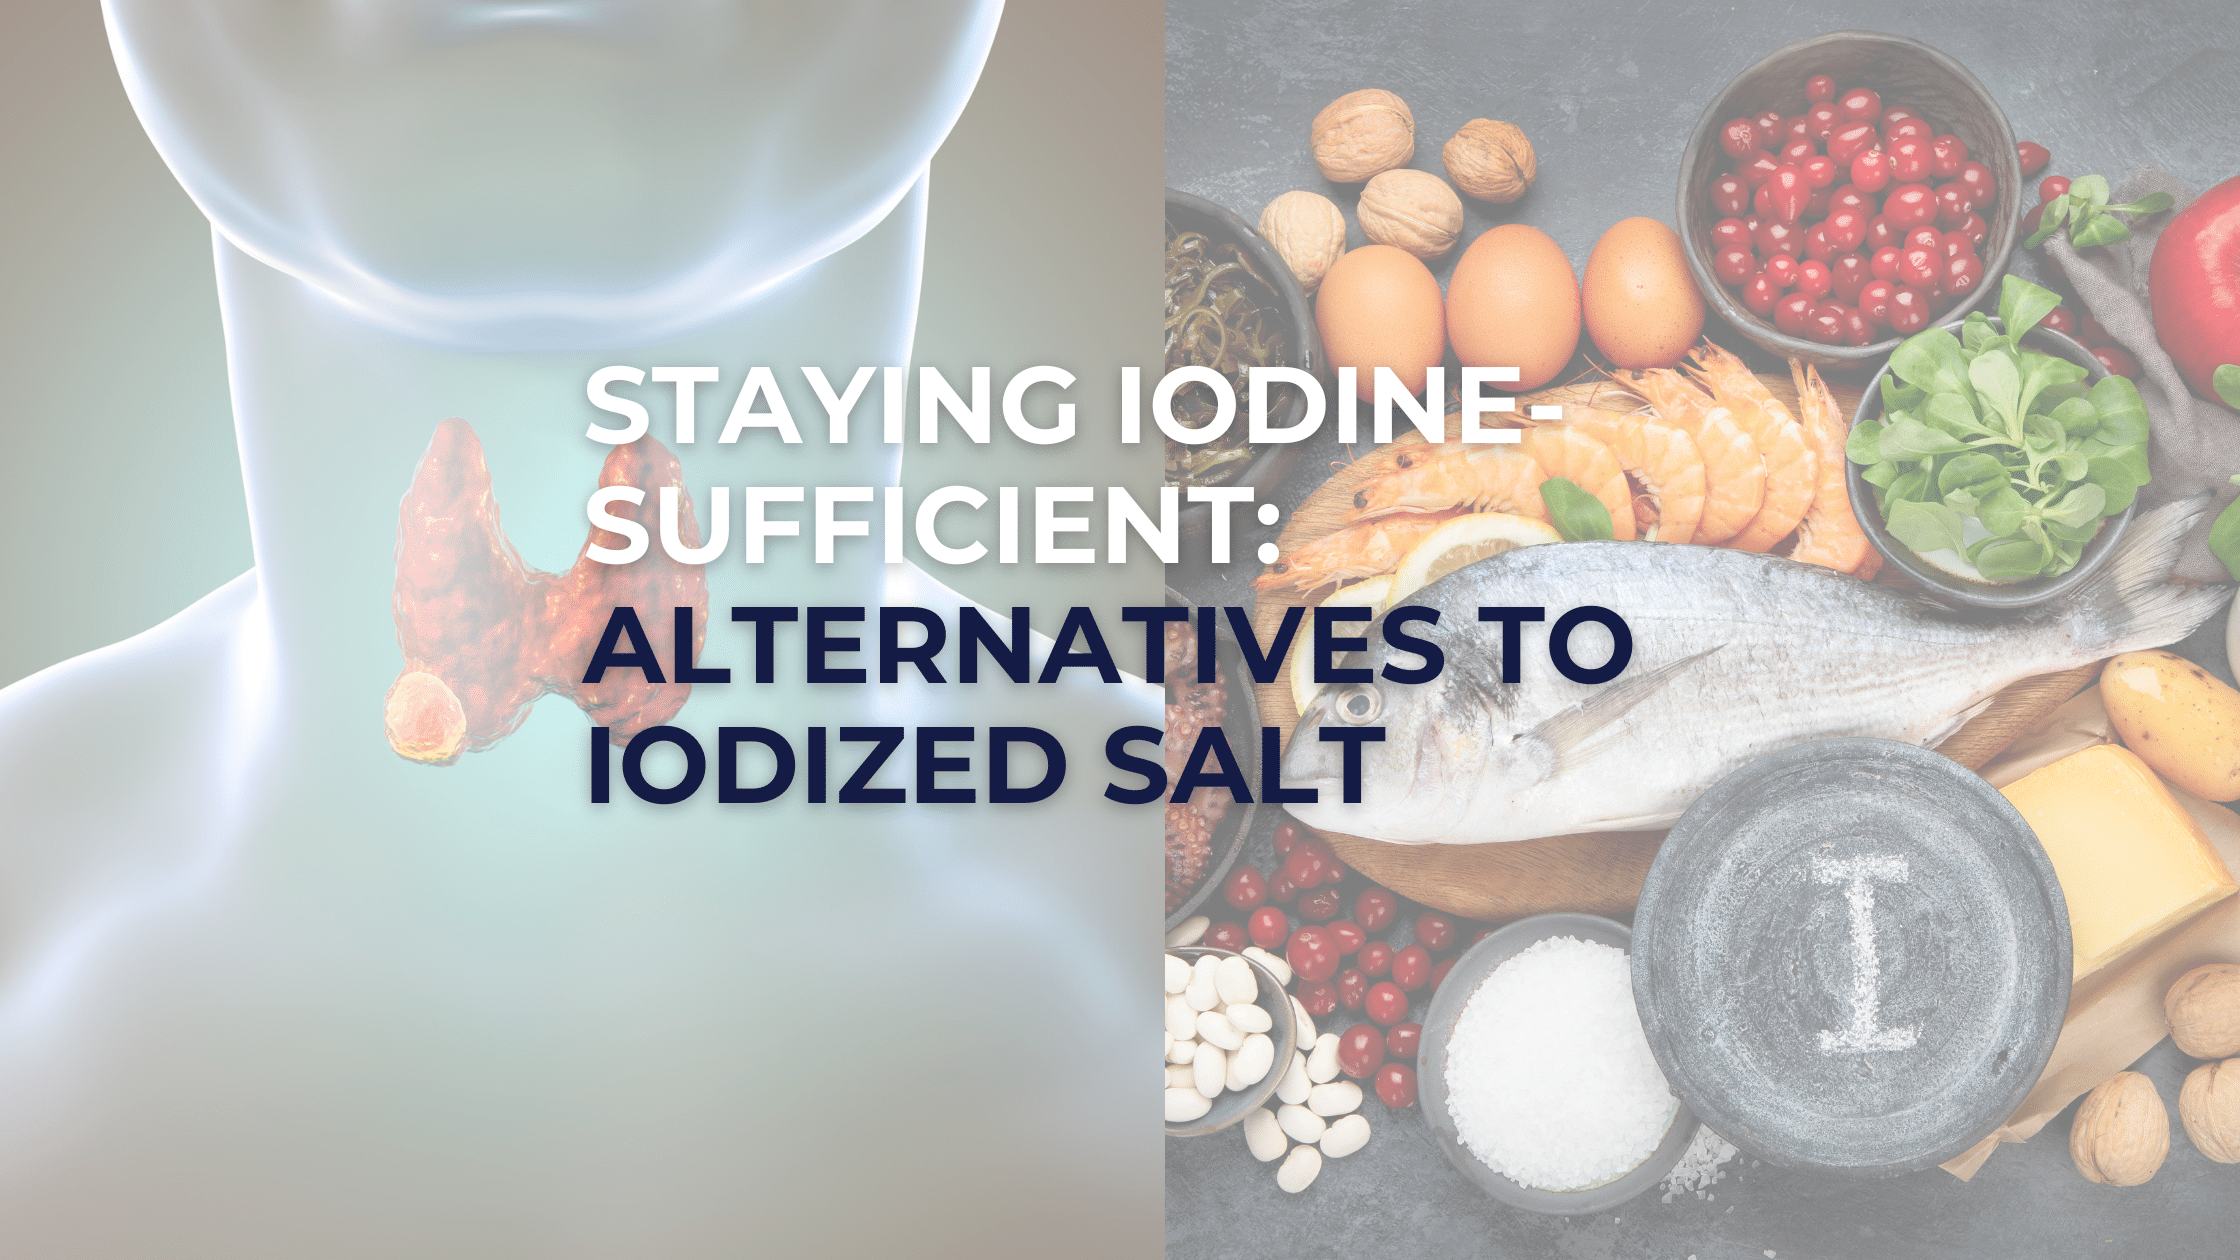 Staying Iodine-Sufficient: Alternatives to Iodized Salt